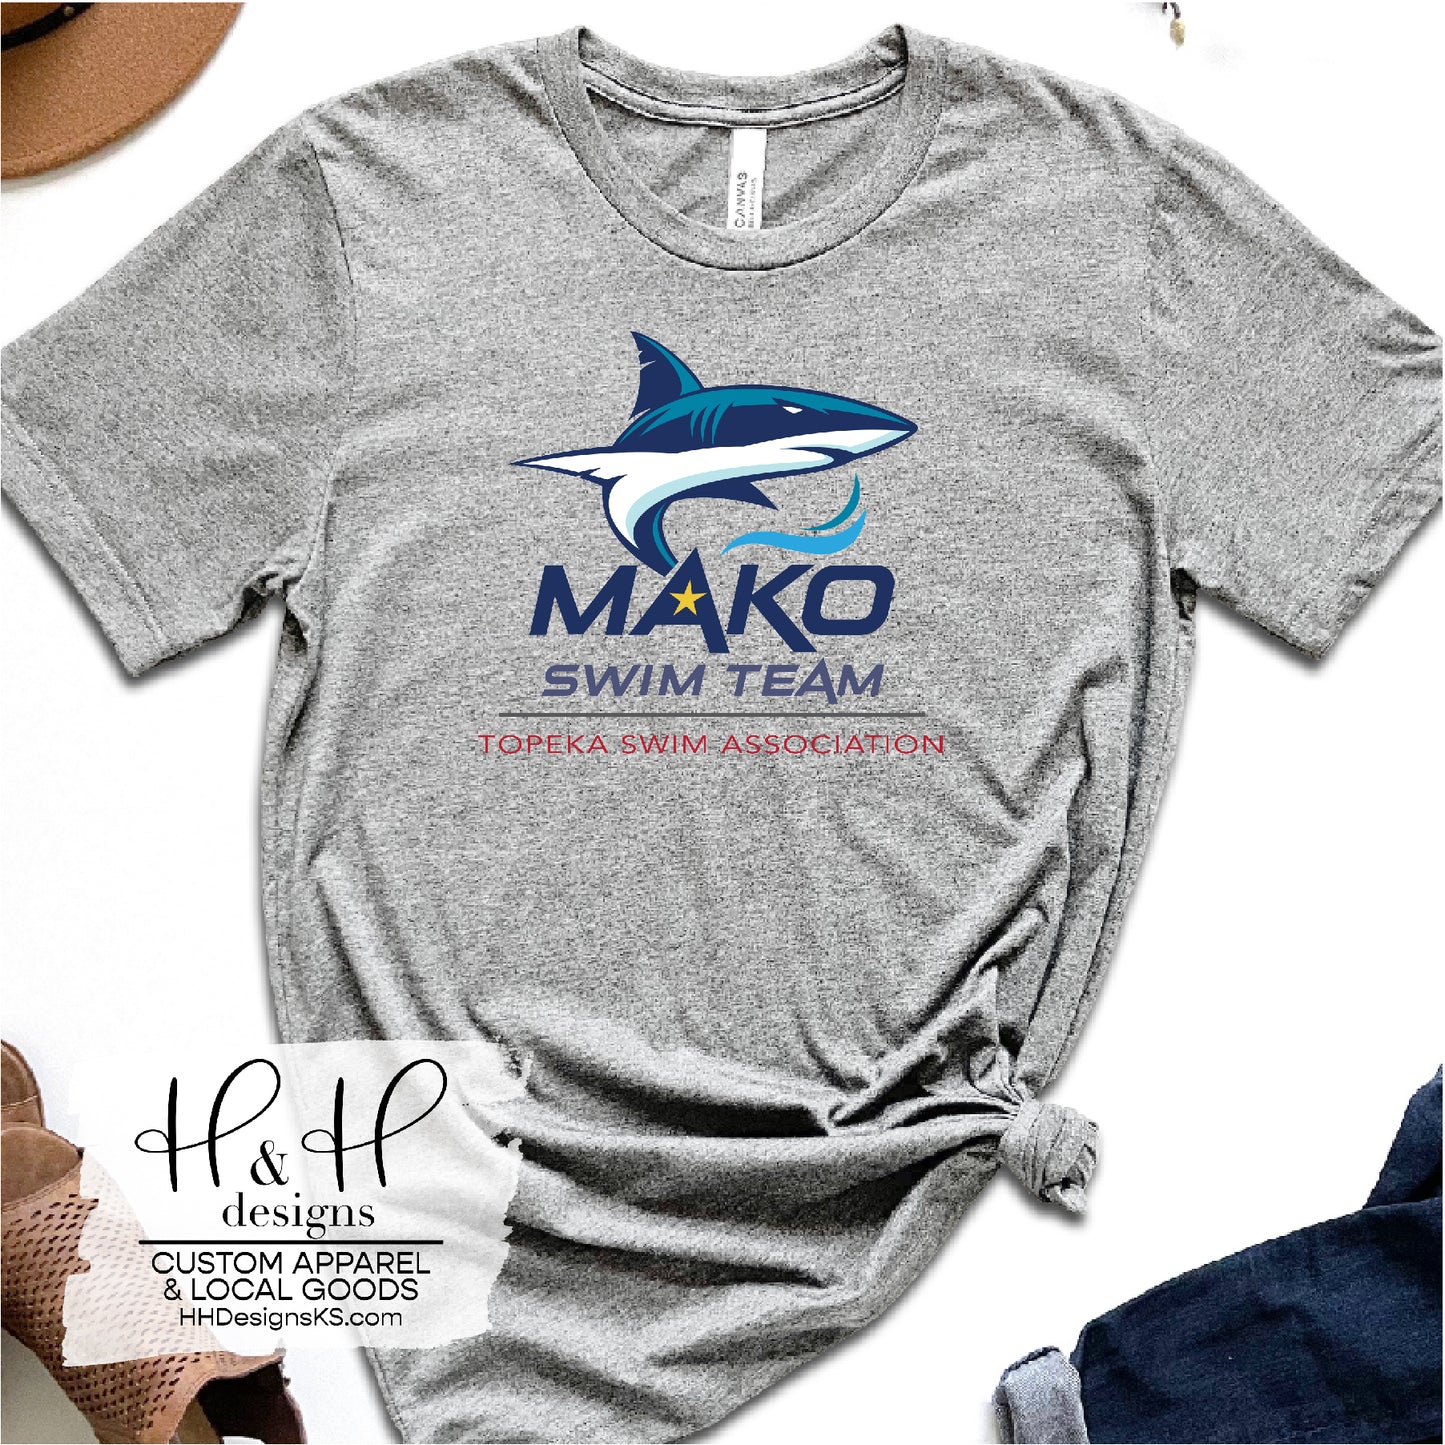 Mako Swim Team - TSA - Topeka Swim Association